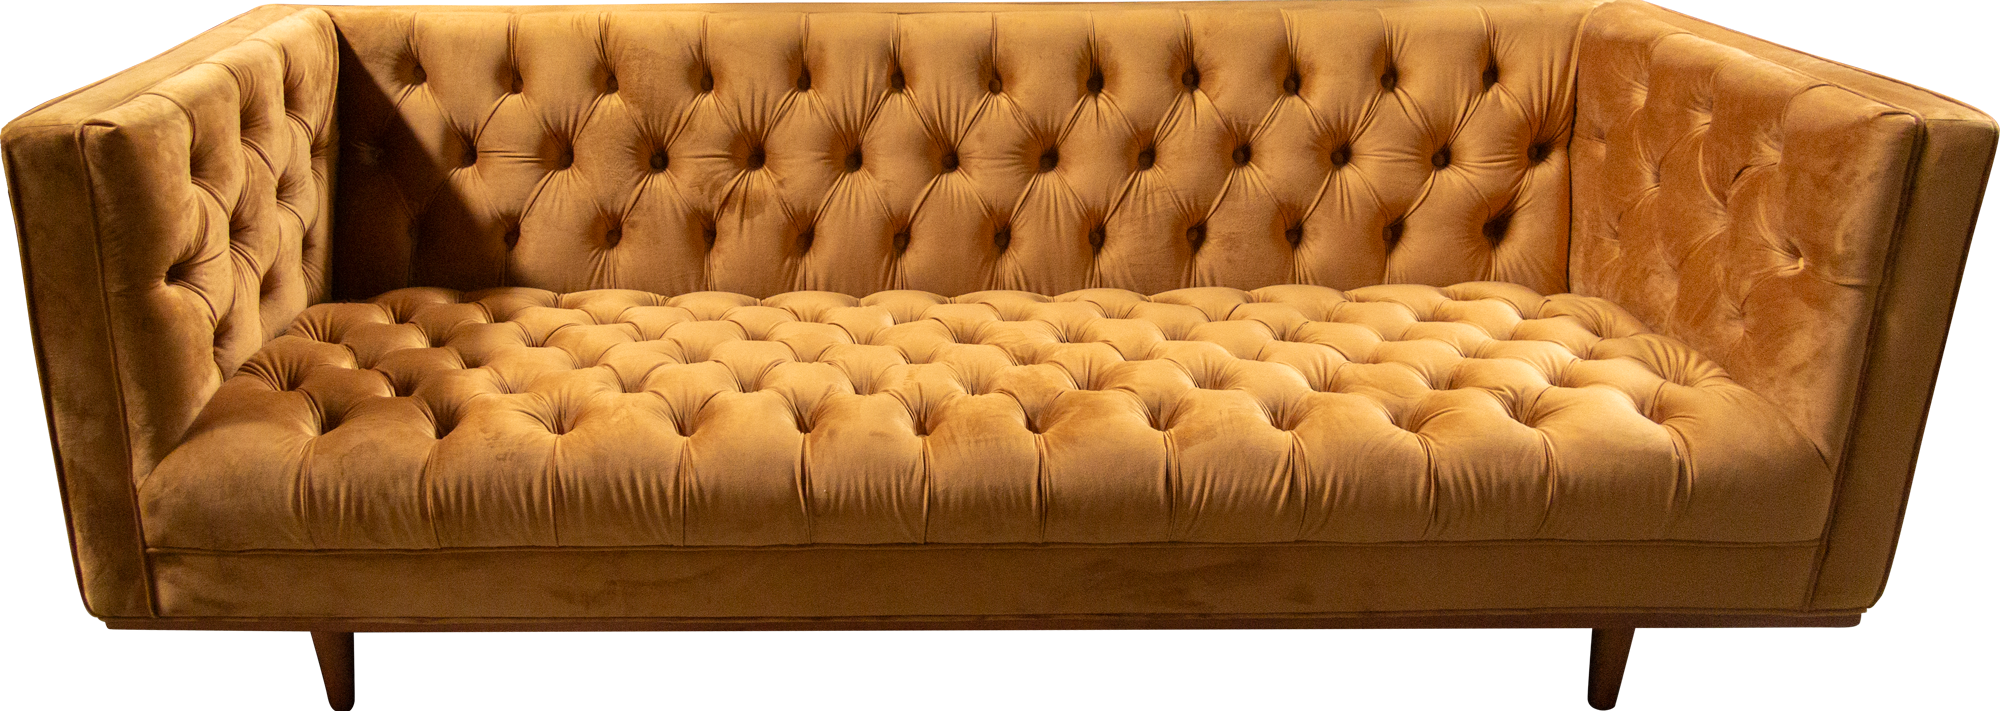 chandler sofa furniture rentals